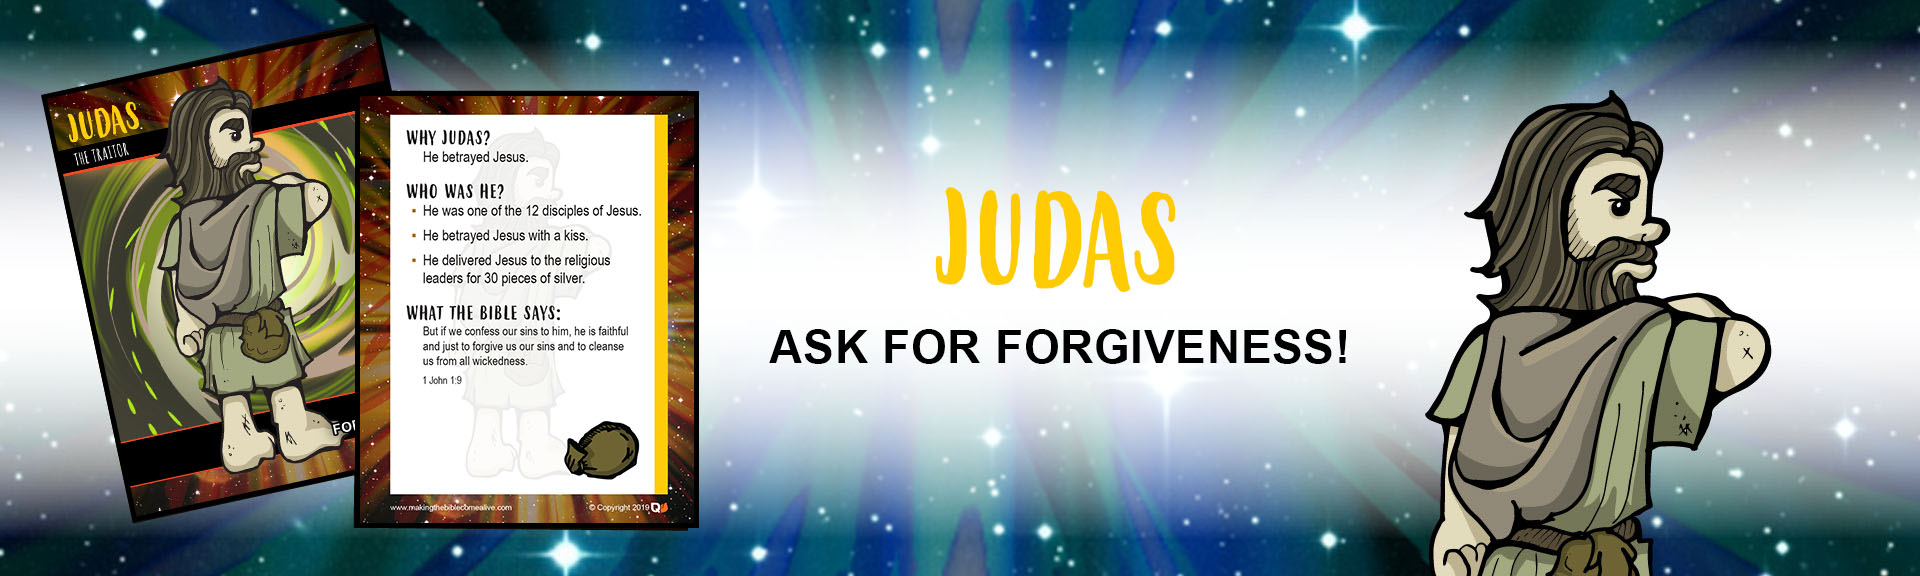 Judas | Making the Bible Come Alive